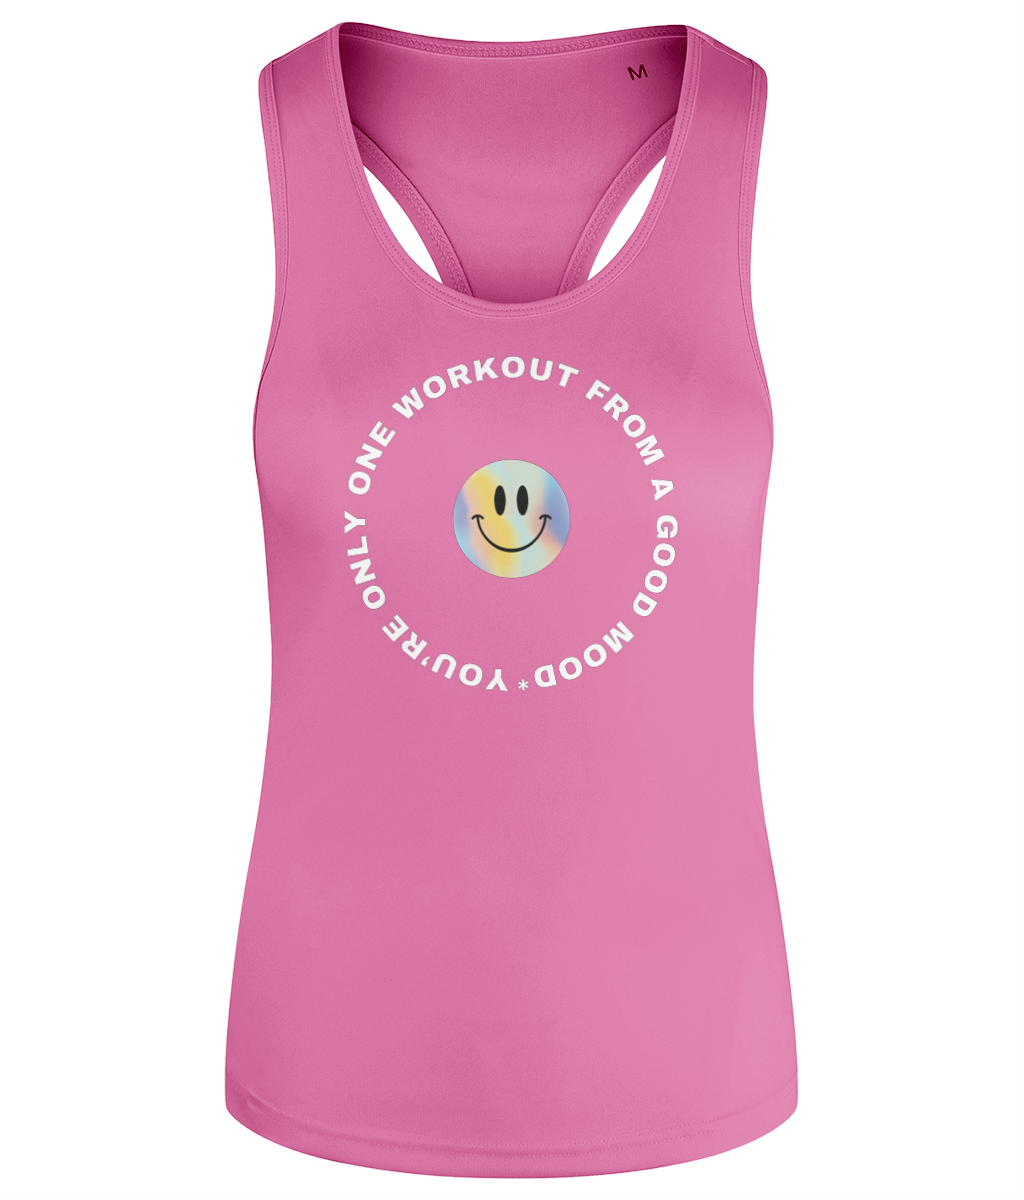 Workout Quote Women's Racerback Tank Top Vest